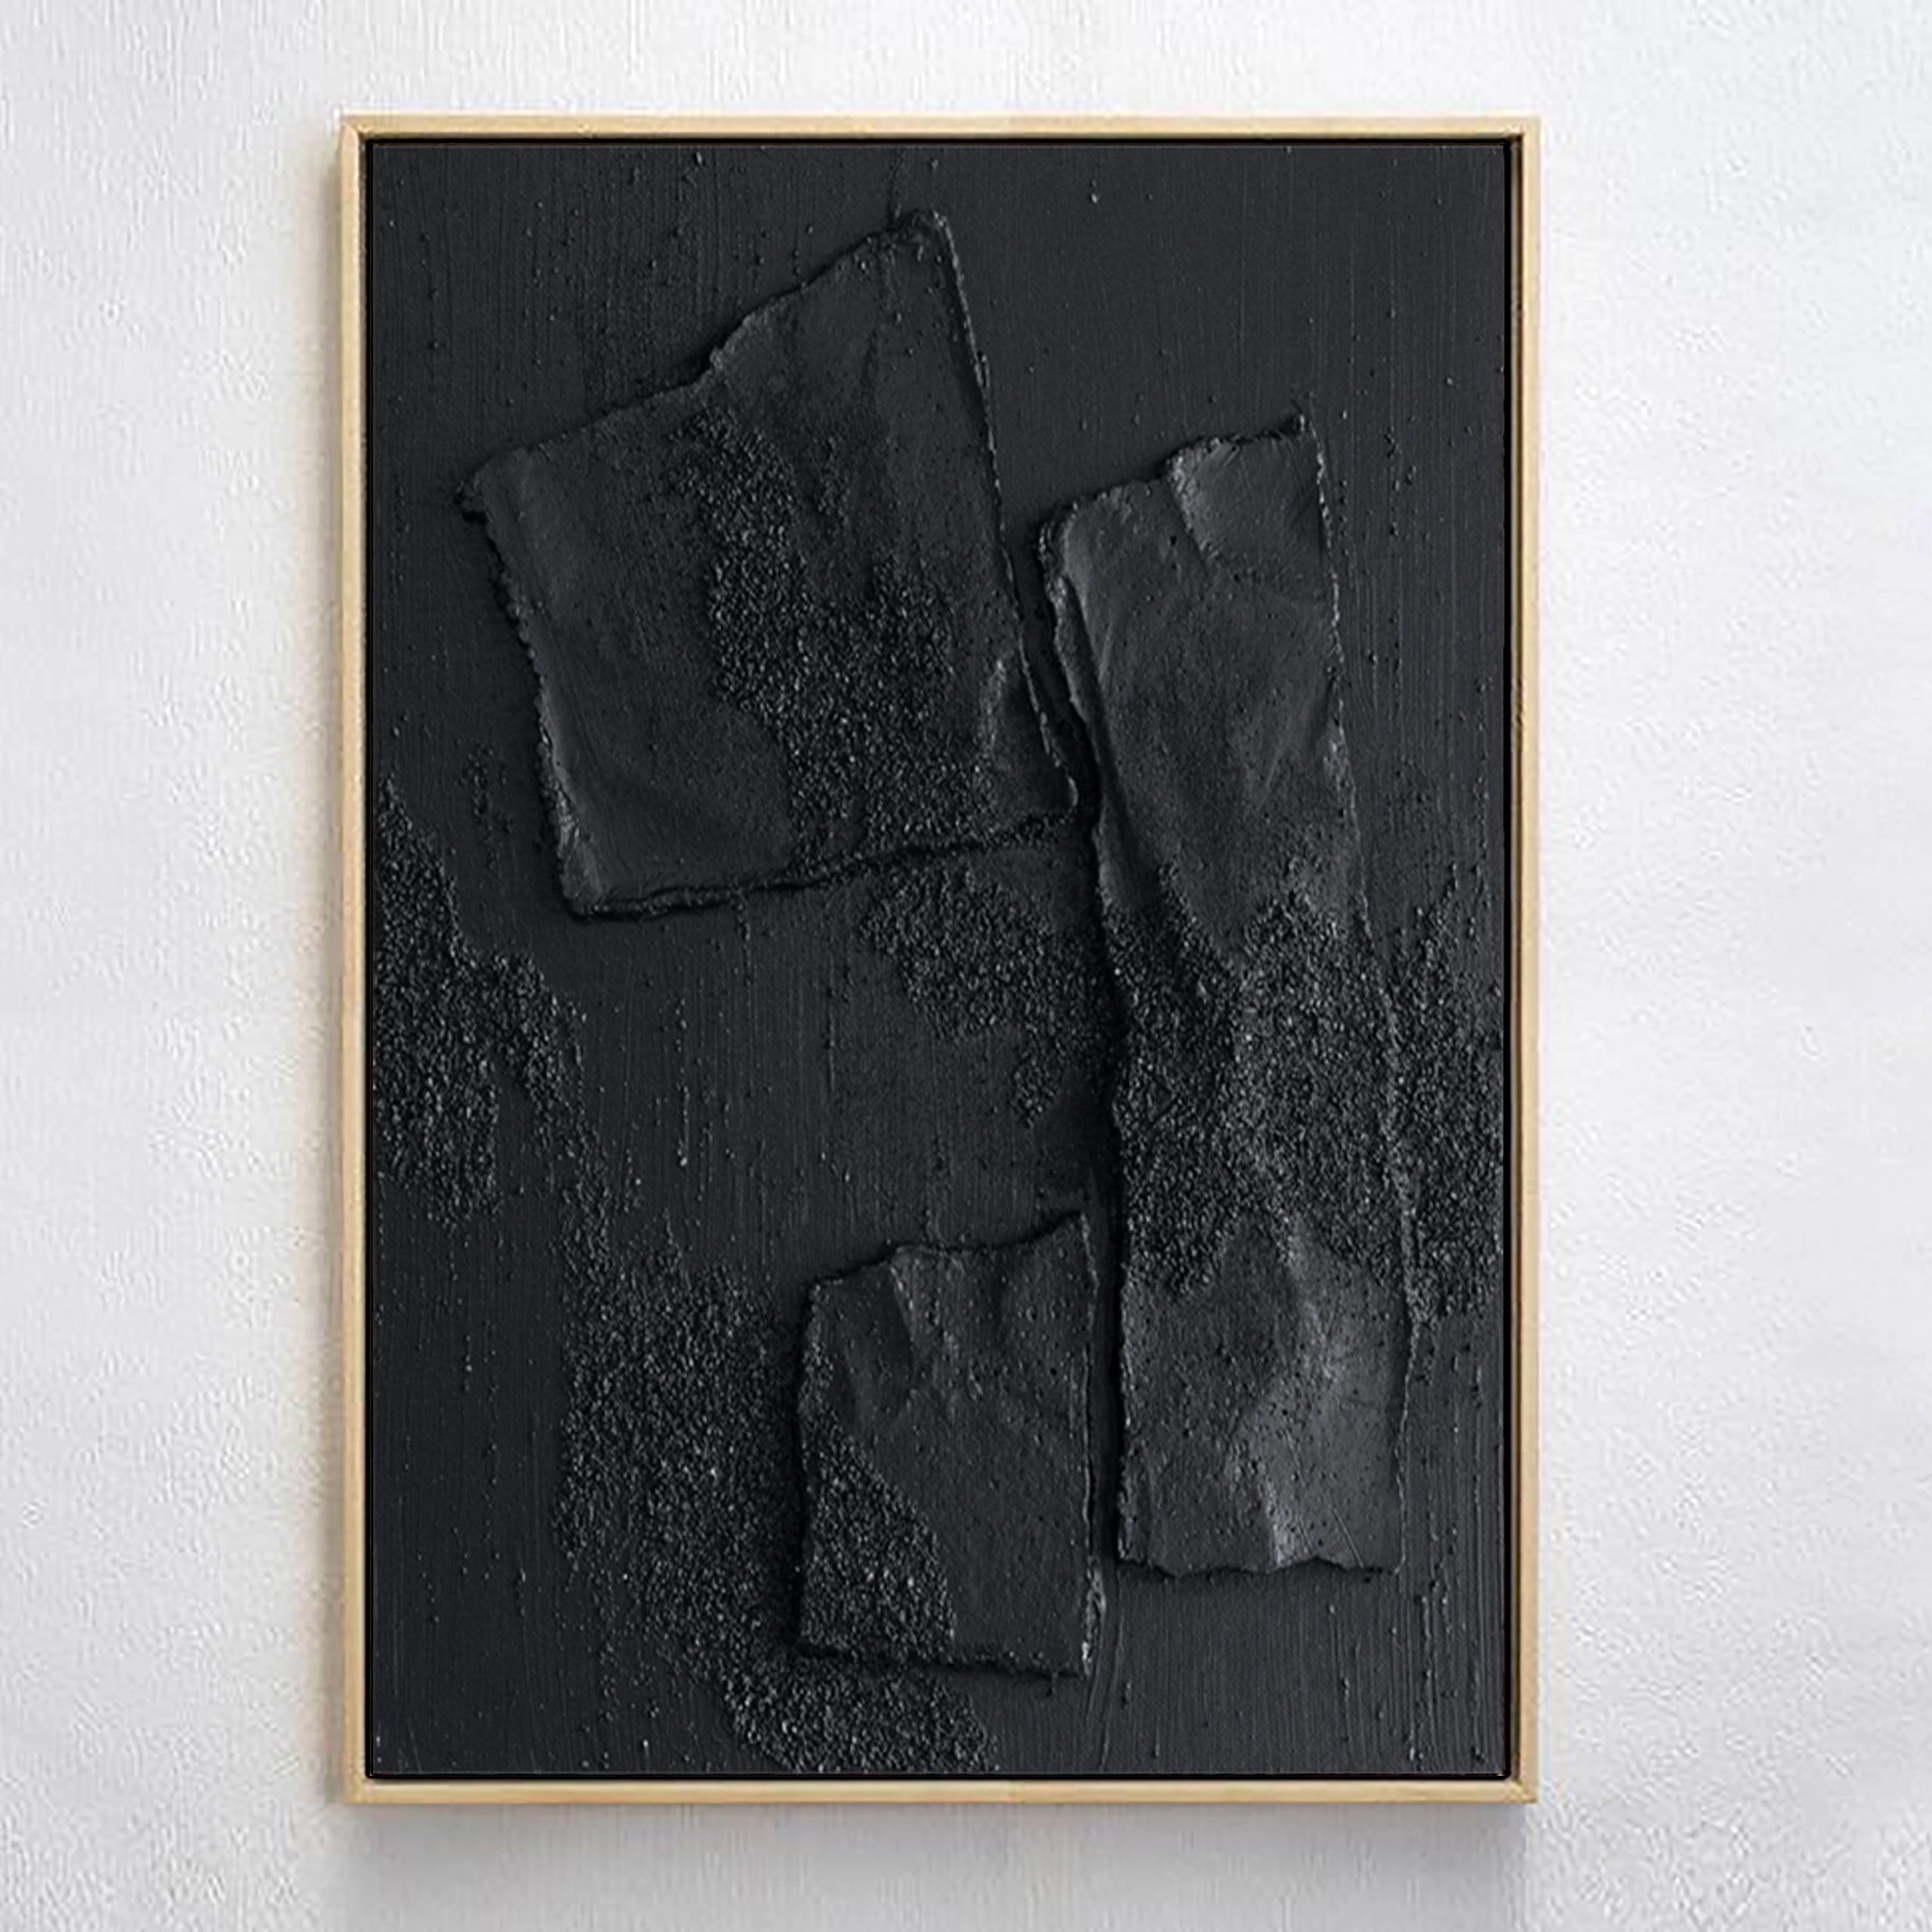 Total Black Plaster Art Minimalist Zen Abstract Painting on Canvas